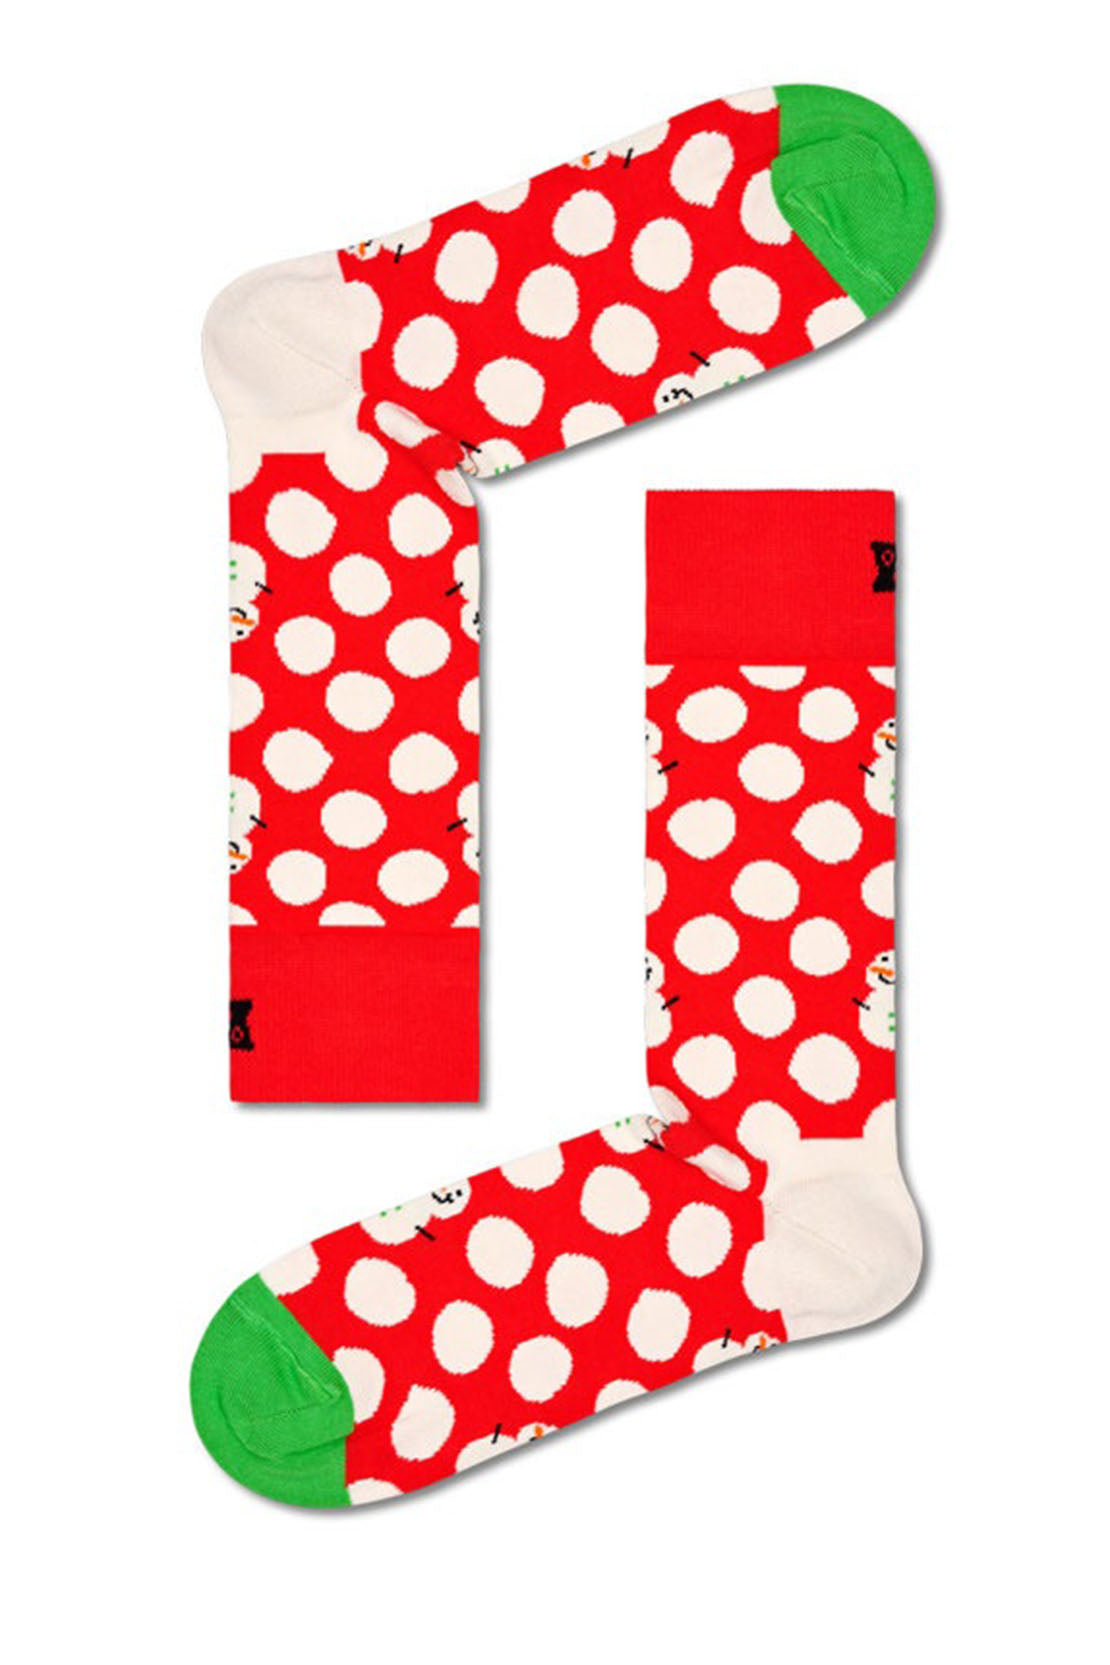 HAPPY SOCKS - 3 PACK X-MAS STOCKING Socks Gift Set P000327